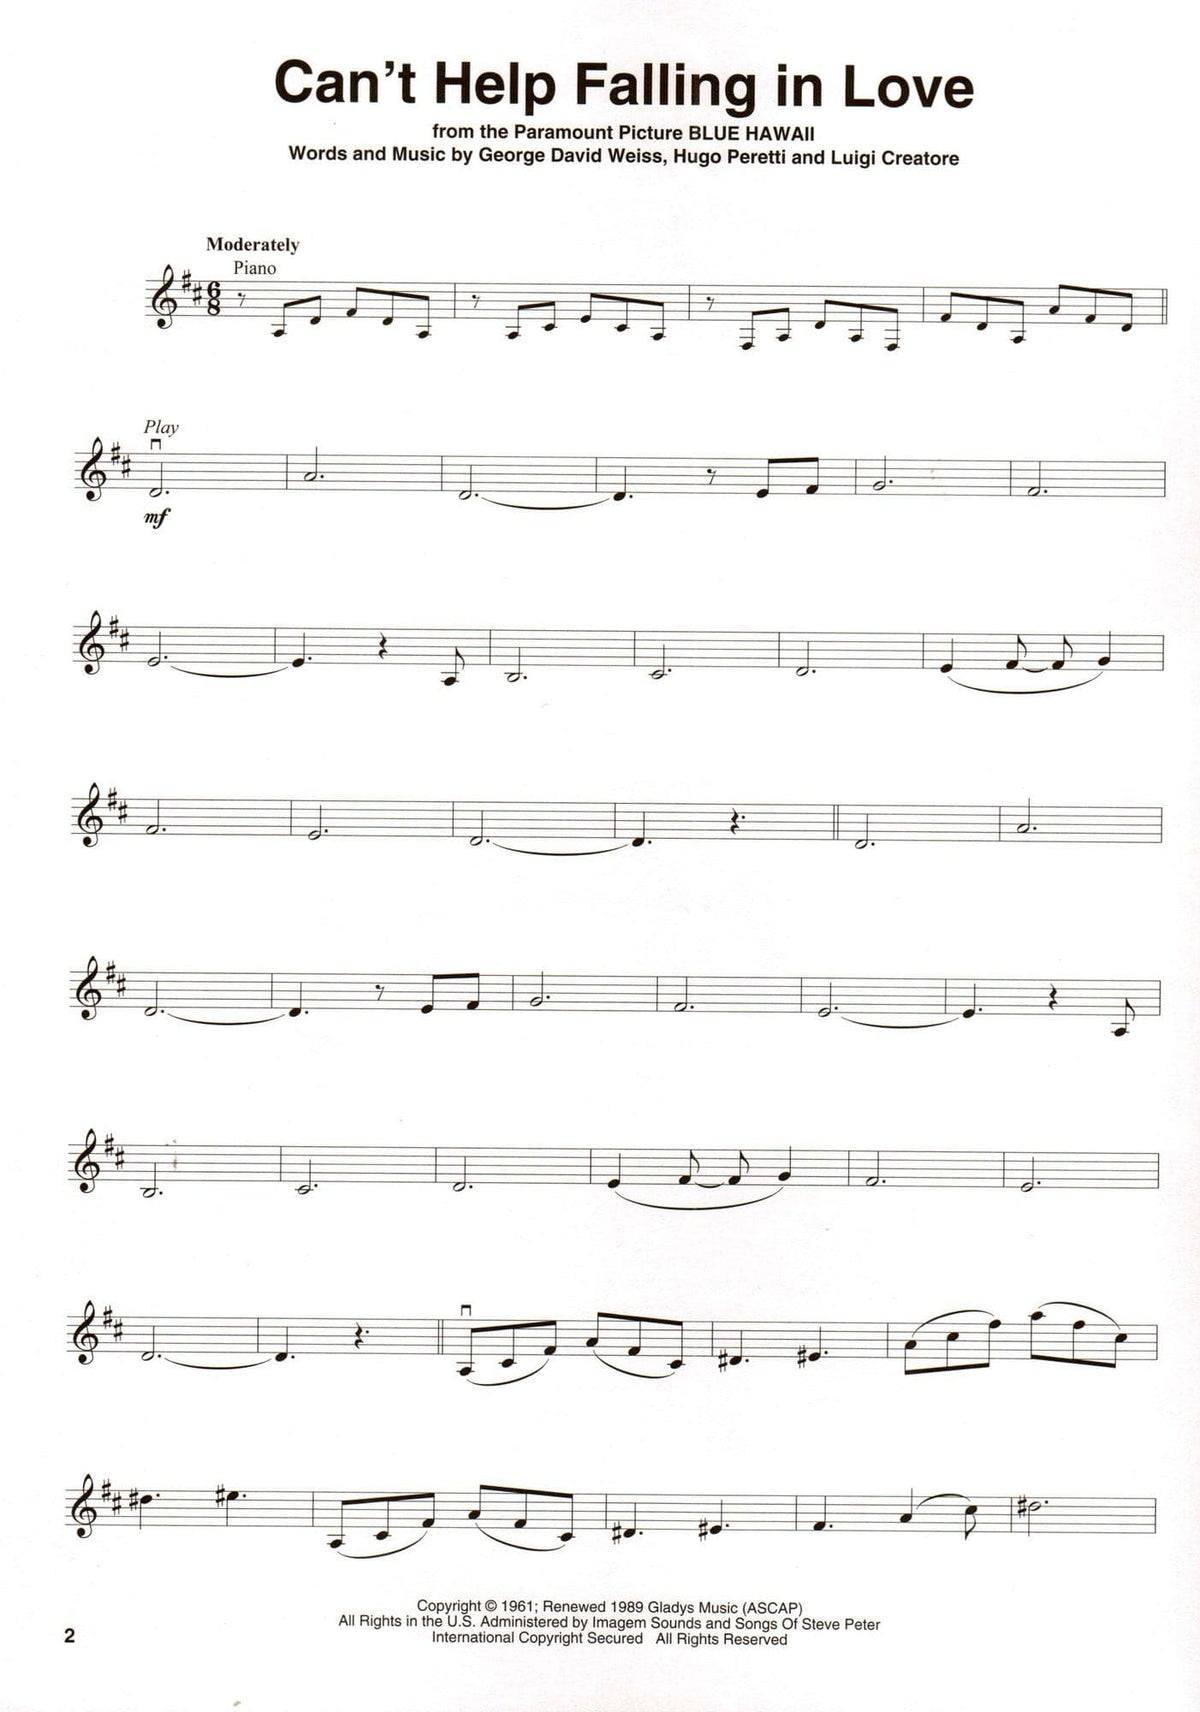 Love Songs - Violin Play-Along Vol. 67 - for Violin with Audio Accompaniment - Hal Leonard